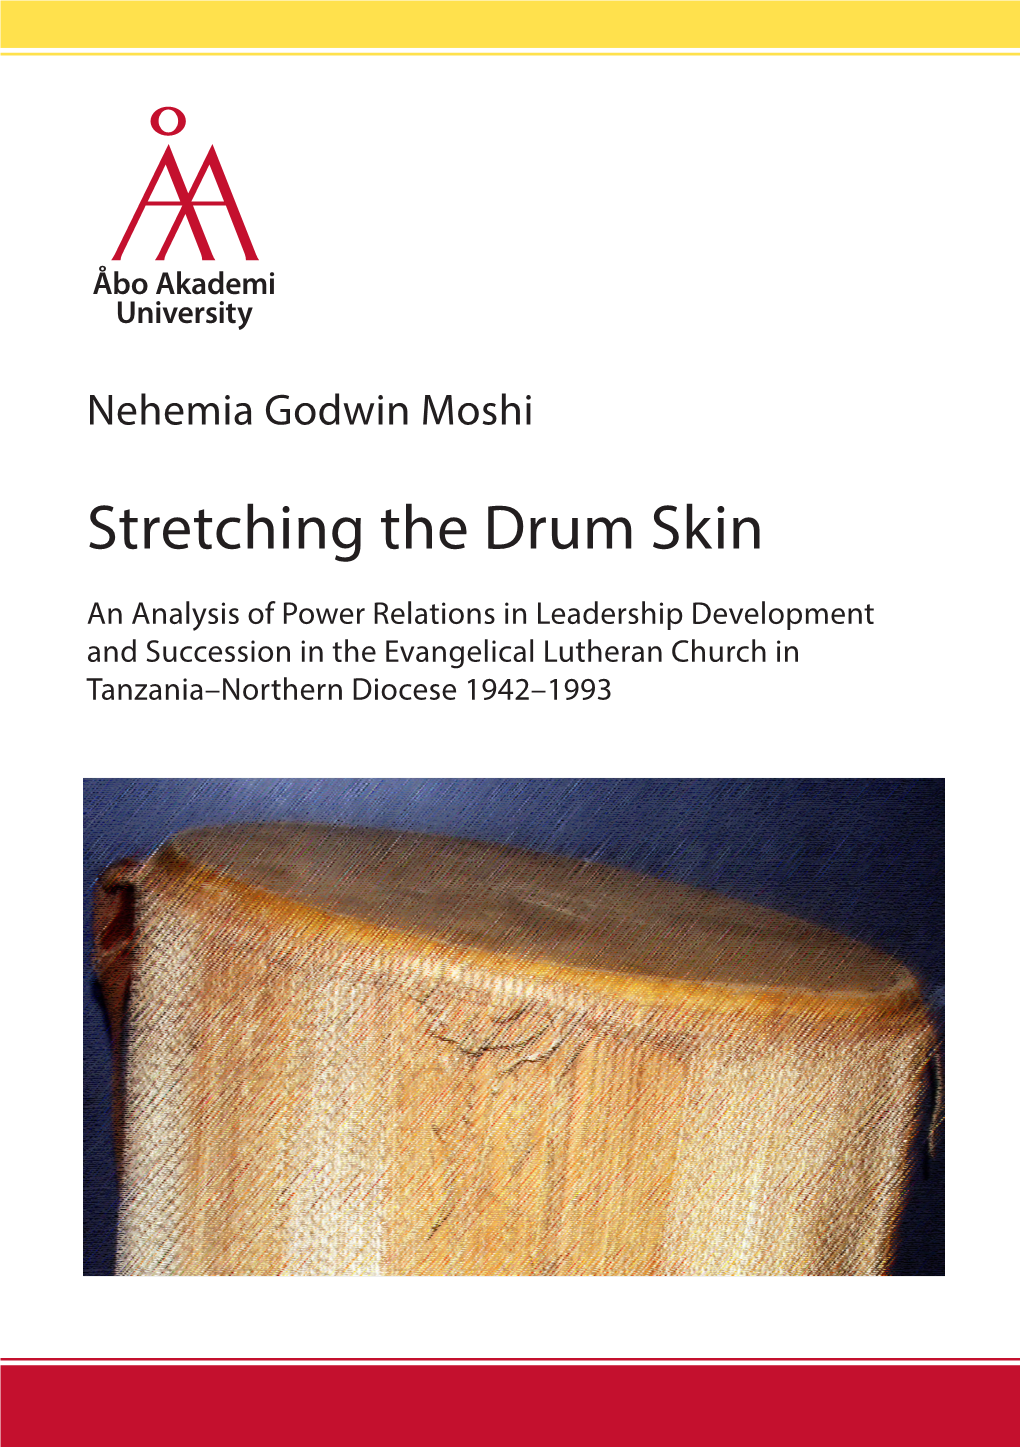 Nehemia Godwin Moshi